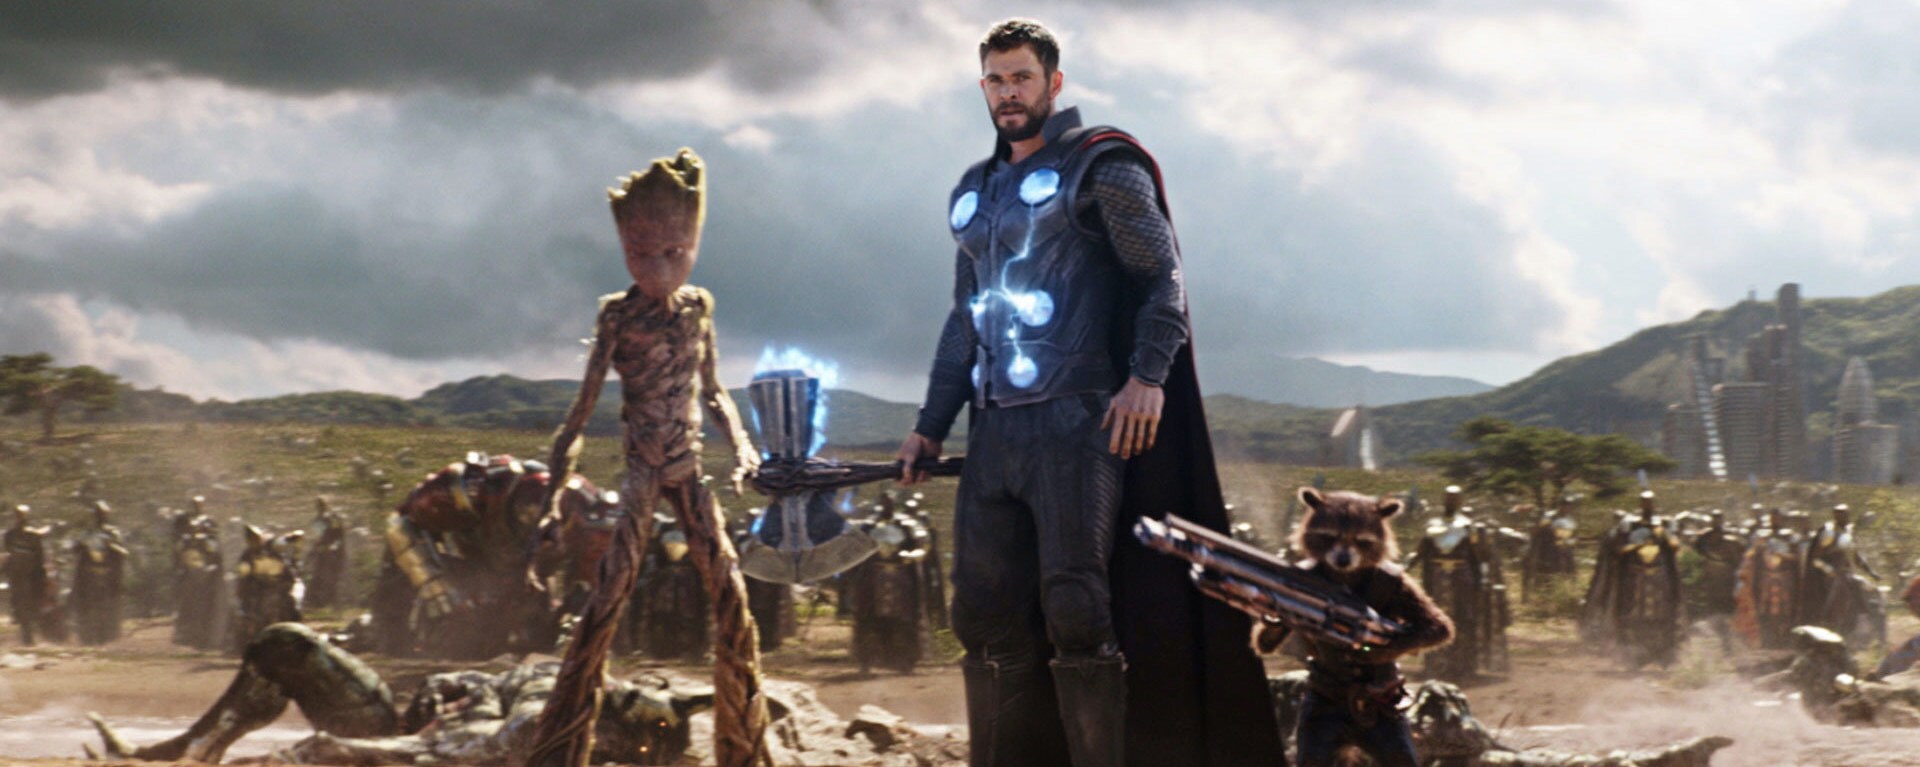 Thor - Avengers Infinity War